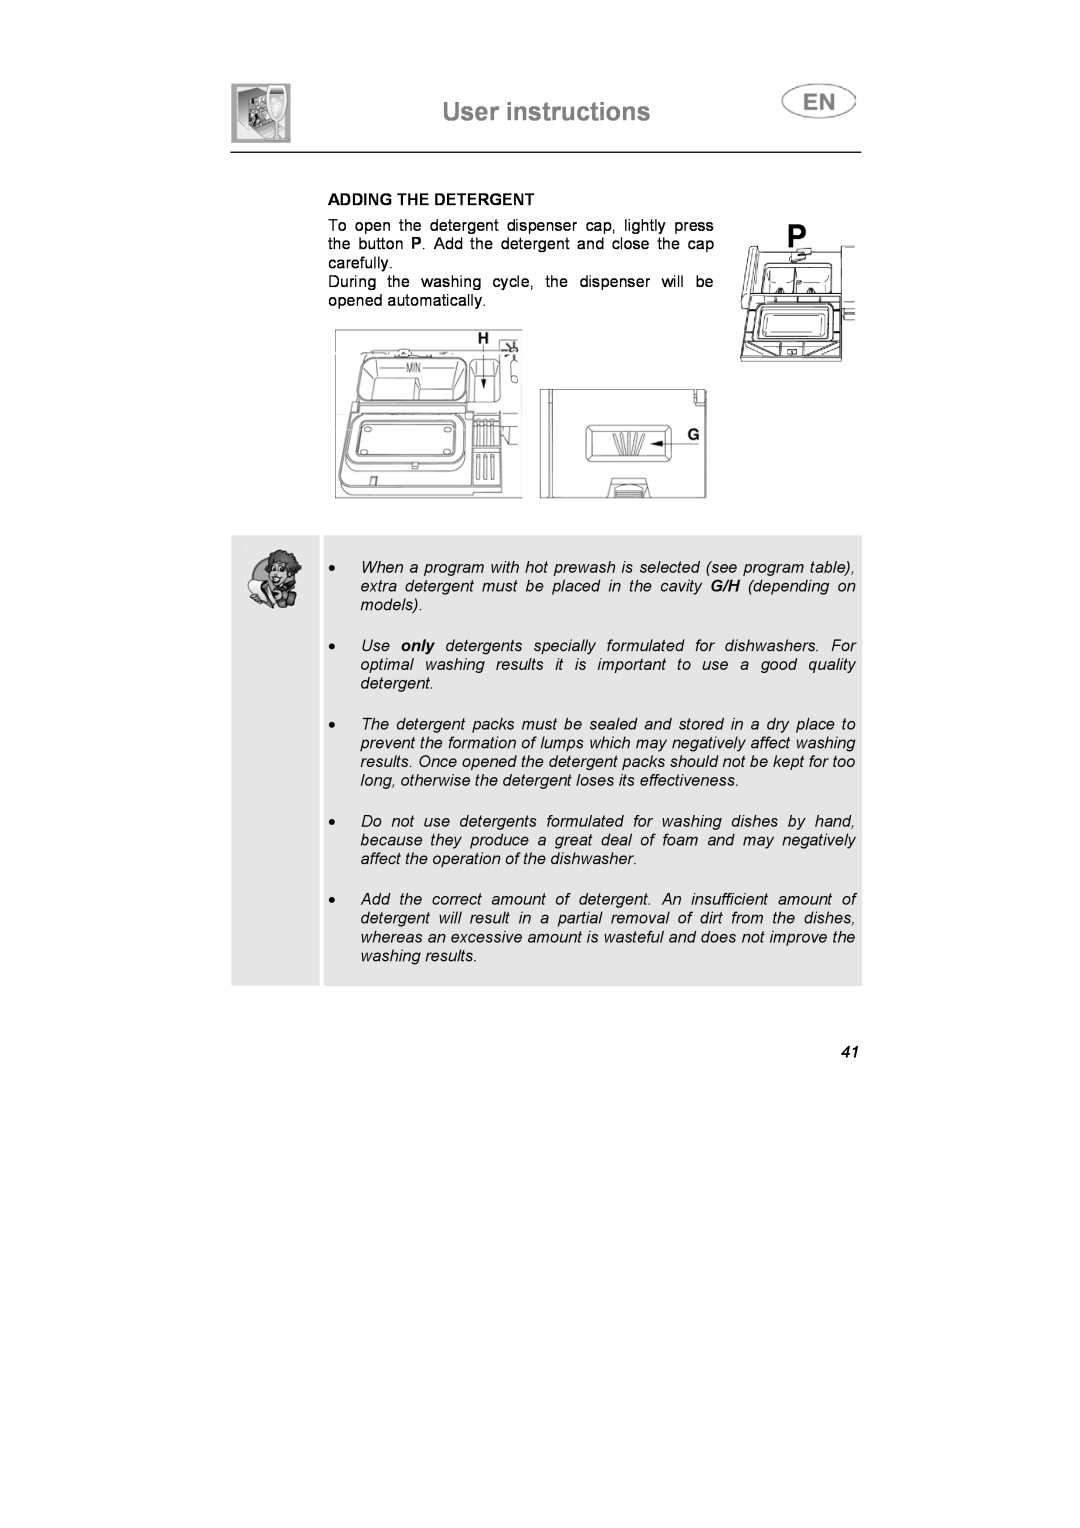 Smeg ST1124S-1 instruction manual User instructions, Adding The Detergent 